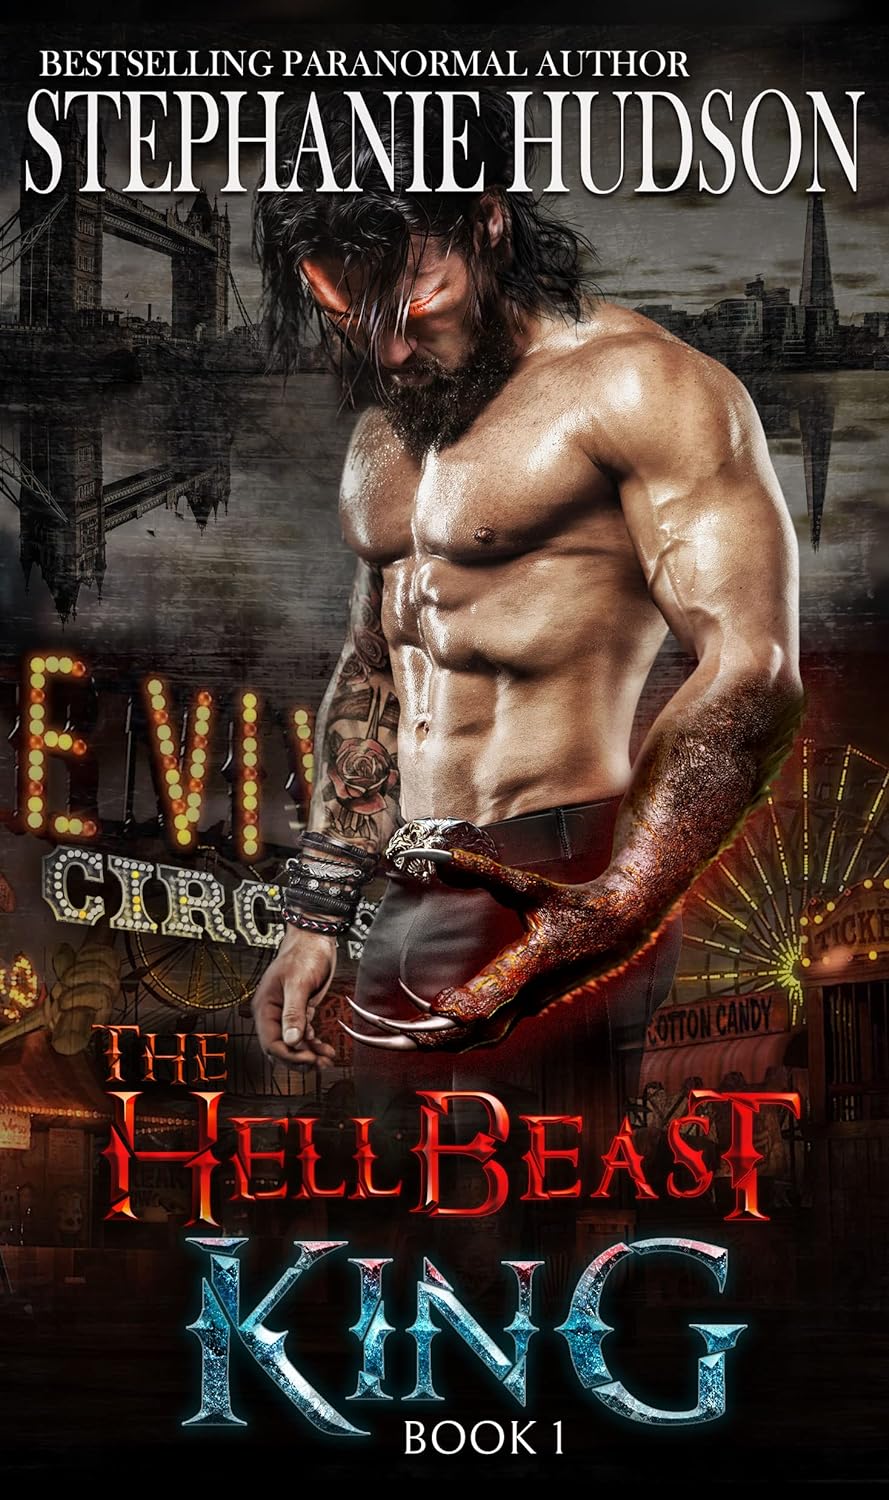 The Hellbeast King (The Hellbeast King Book 1) by Stephanie Hudson